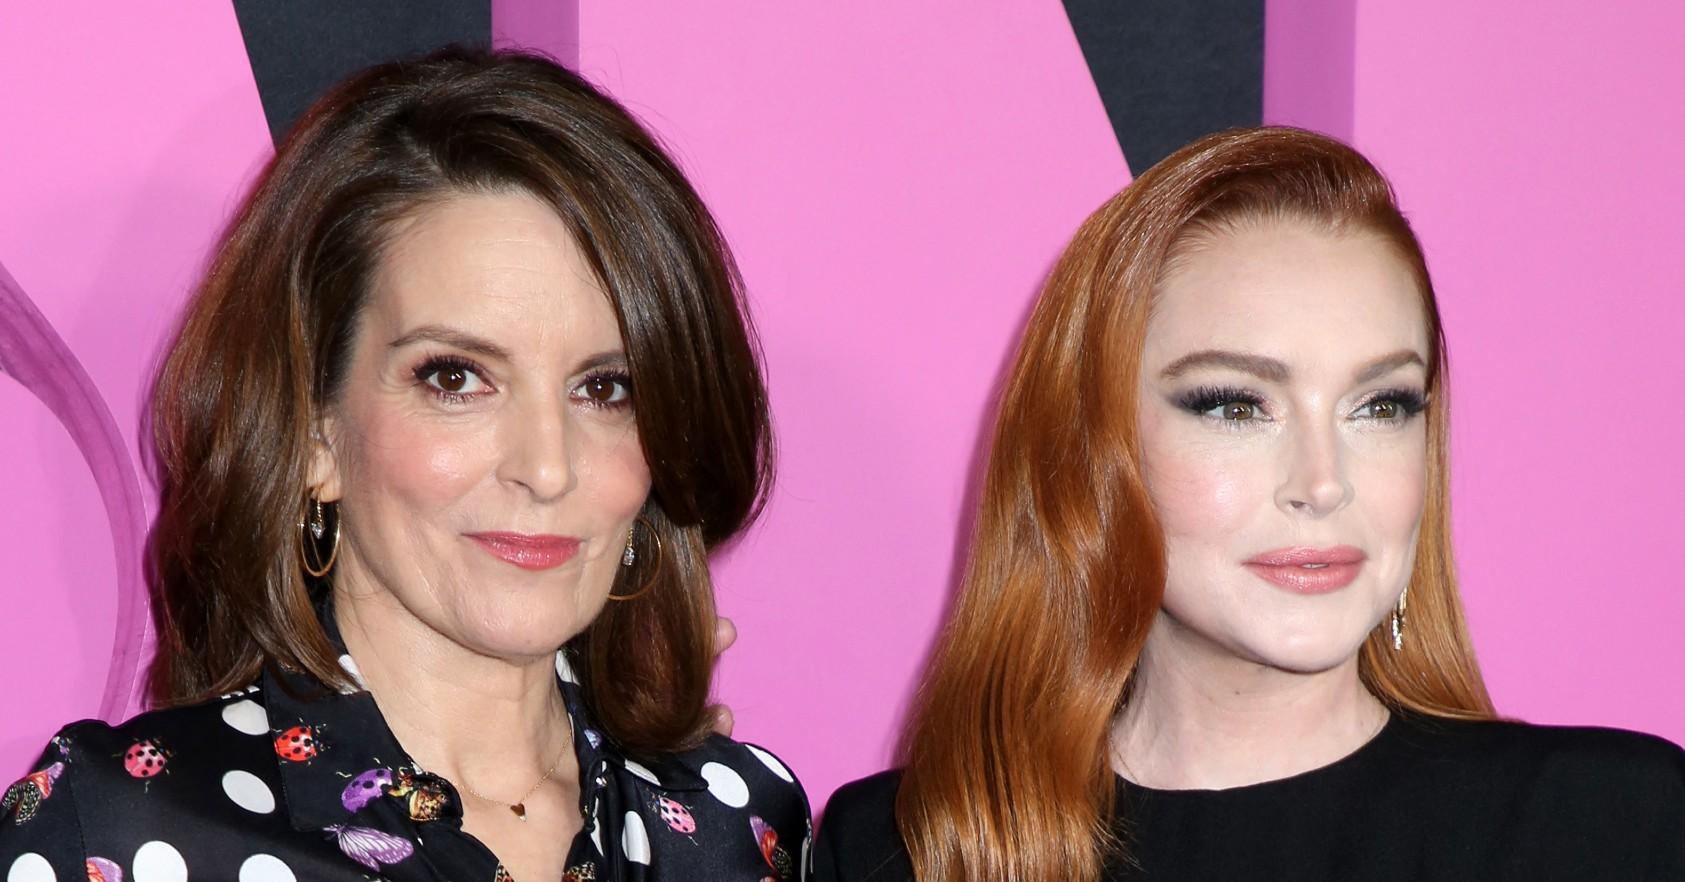 Tina Fey & Lindsay Lohan Reunite At 'Mean Girls' Premiere: Photos